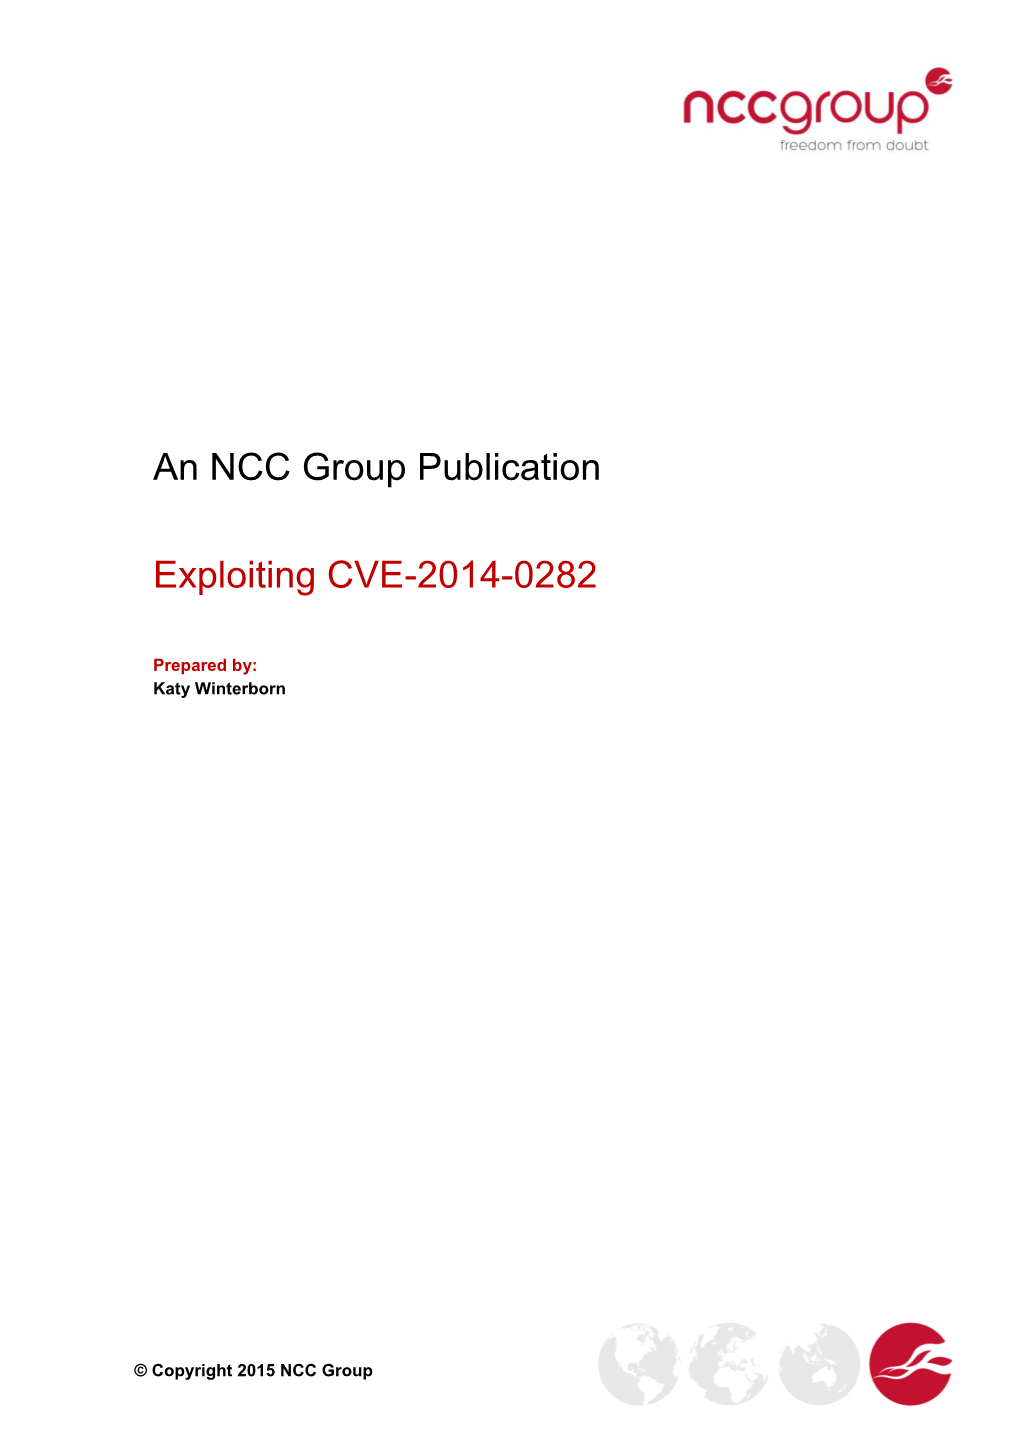 An NCC Group Publication Exploiting CVE-2014-0282